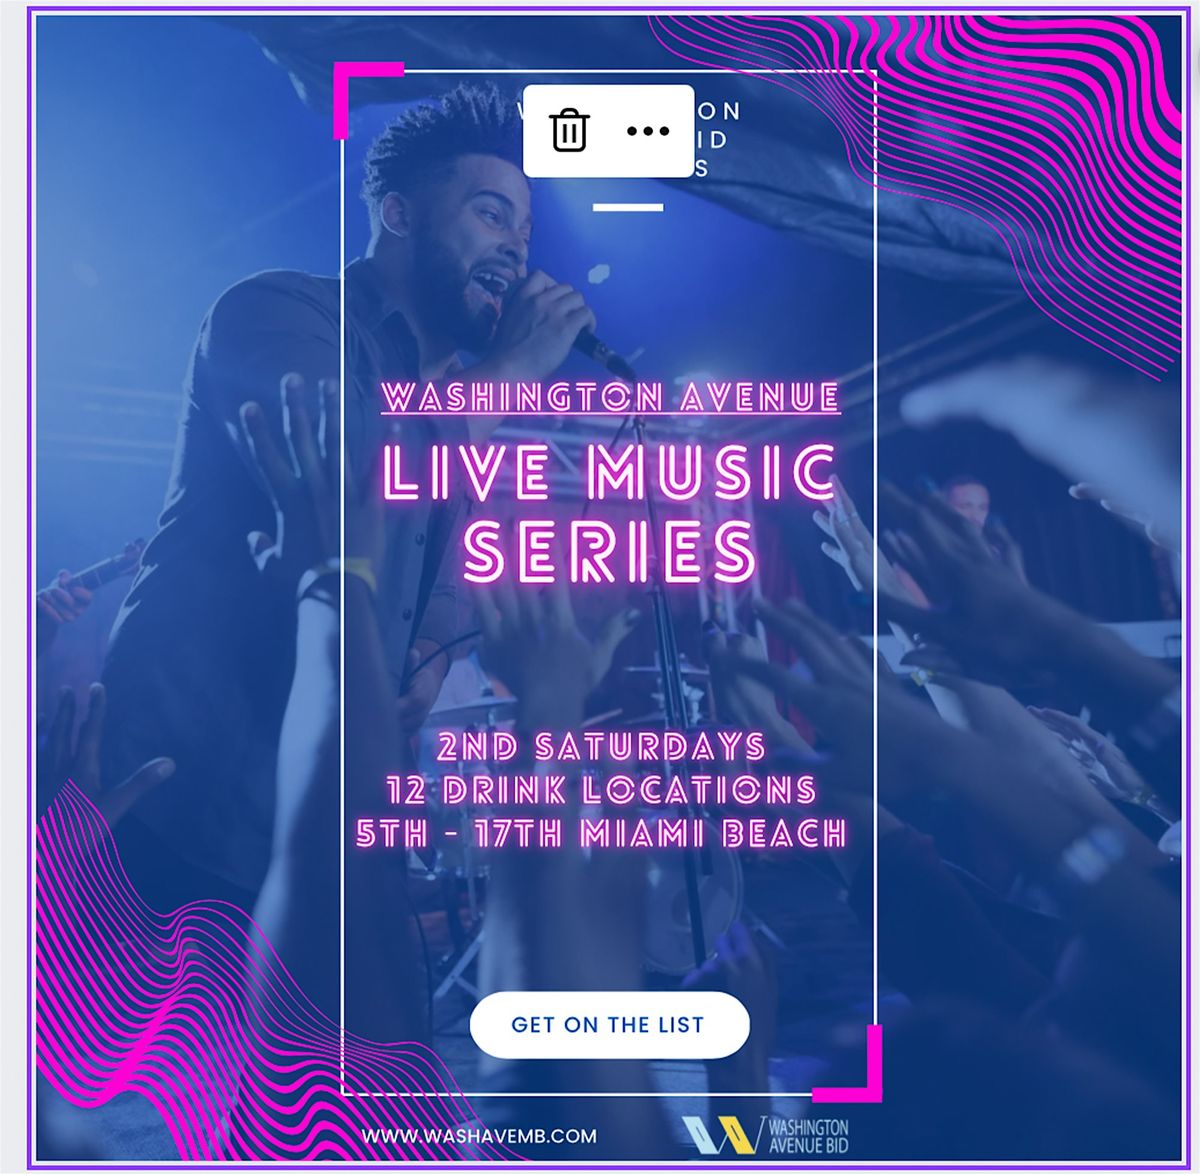 Washington Avenue Live Music Series - Starting August 10th